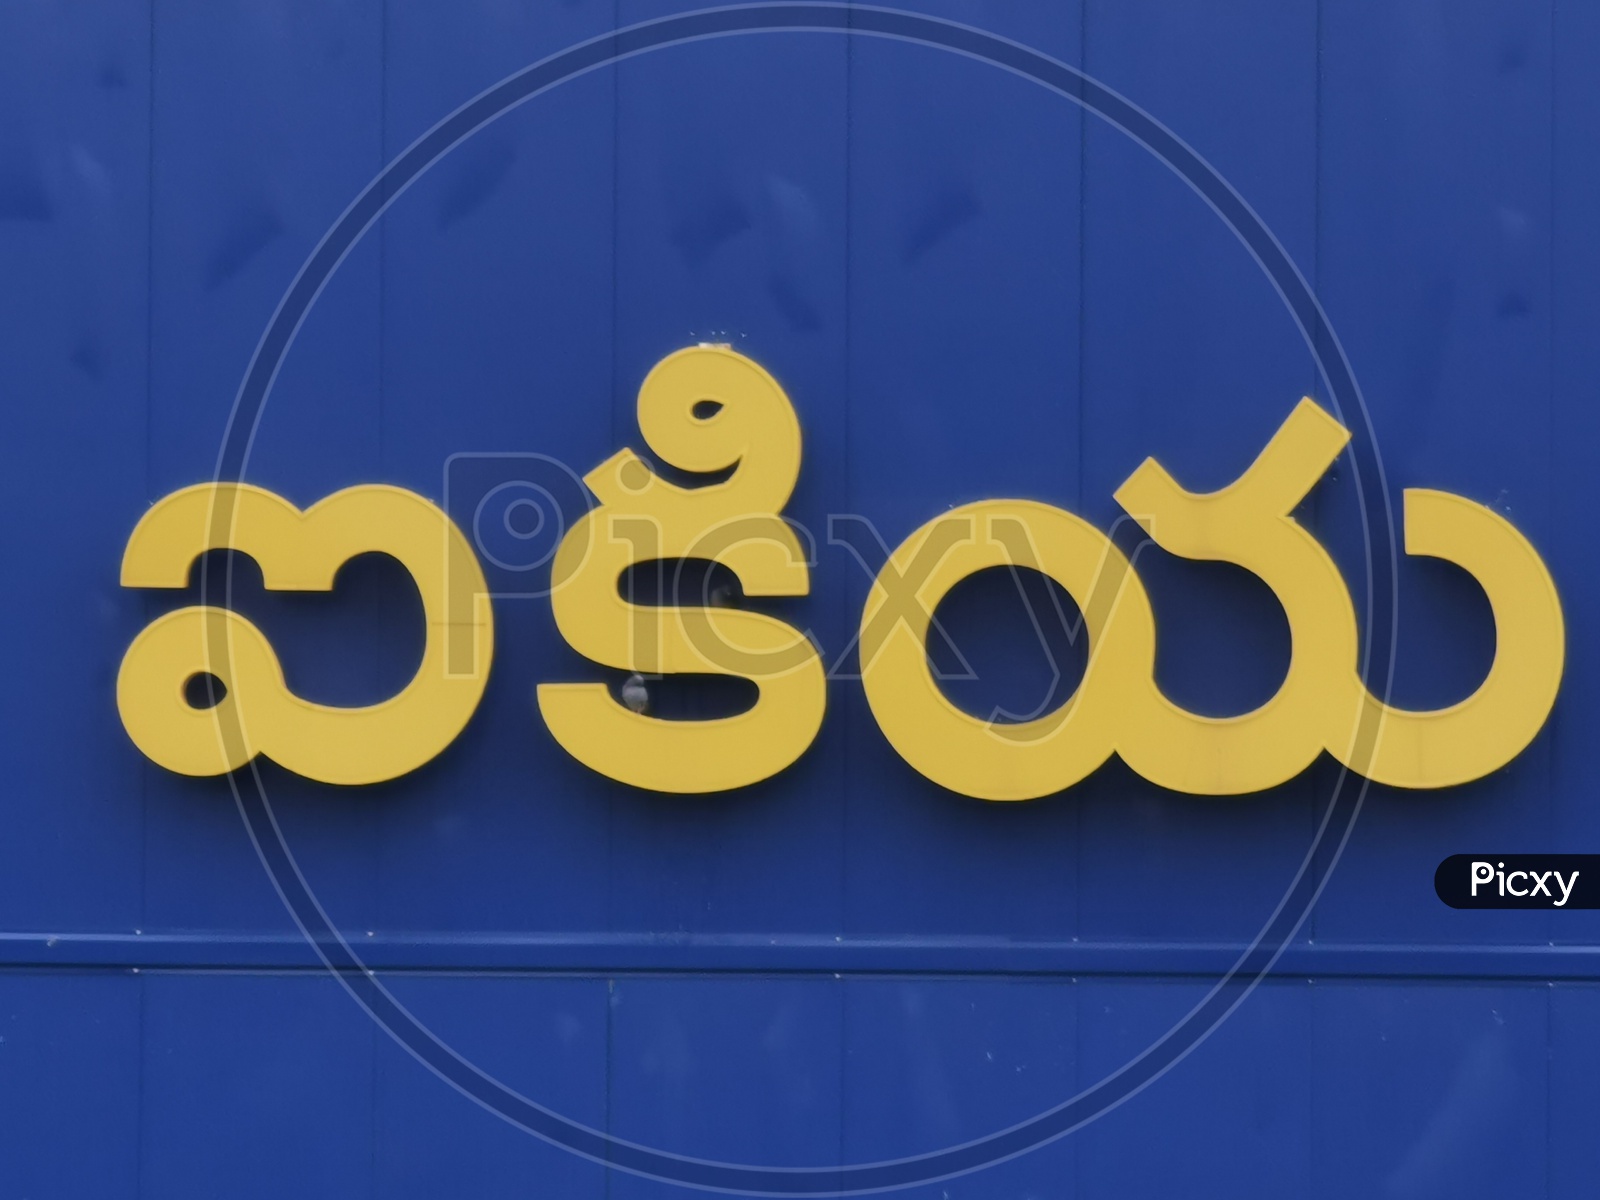 IKEA  In Hyderabad Name Board